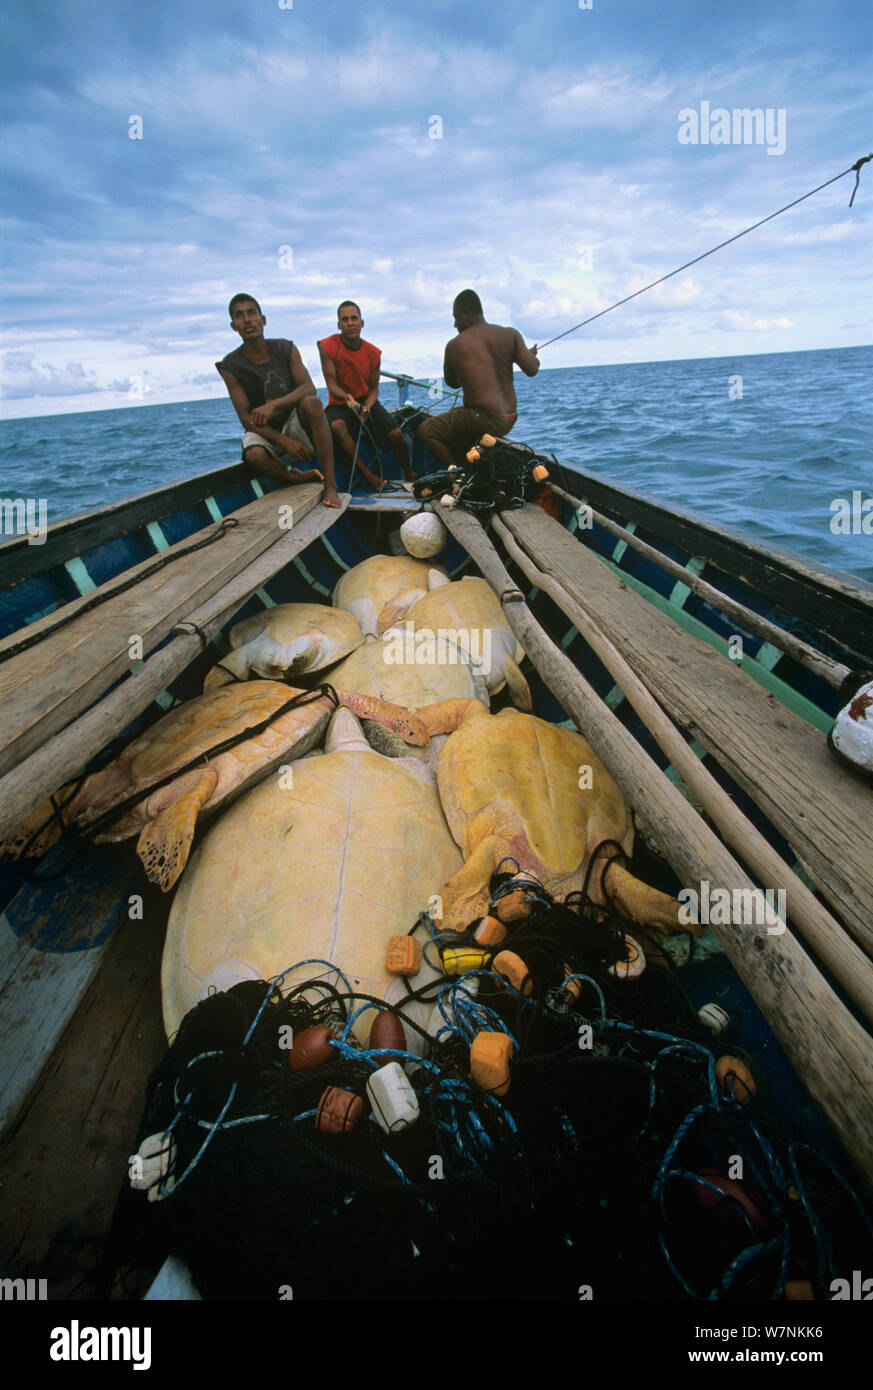 Green turtles (Chelonia mydas) loaded into Duritara boat, hunted by Miskito Indian fishermen, Puerto Cabezas, Nicaragua, Caribbean Sea Model released. Stock Photo